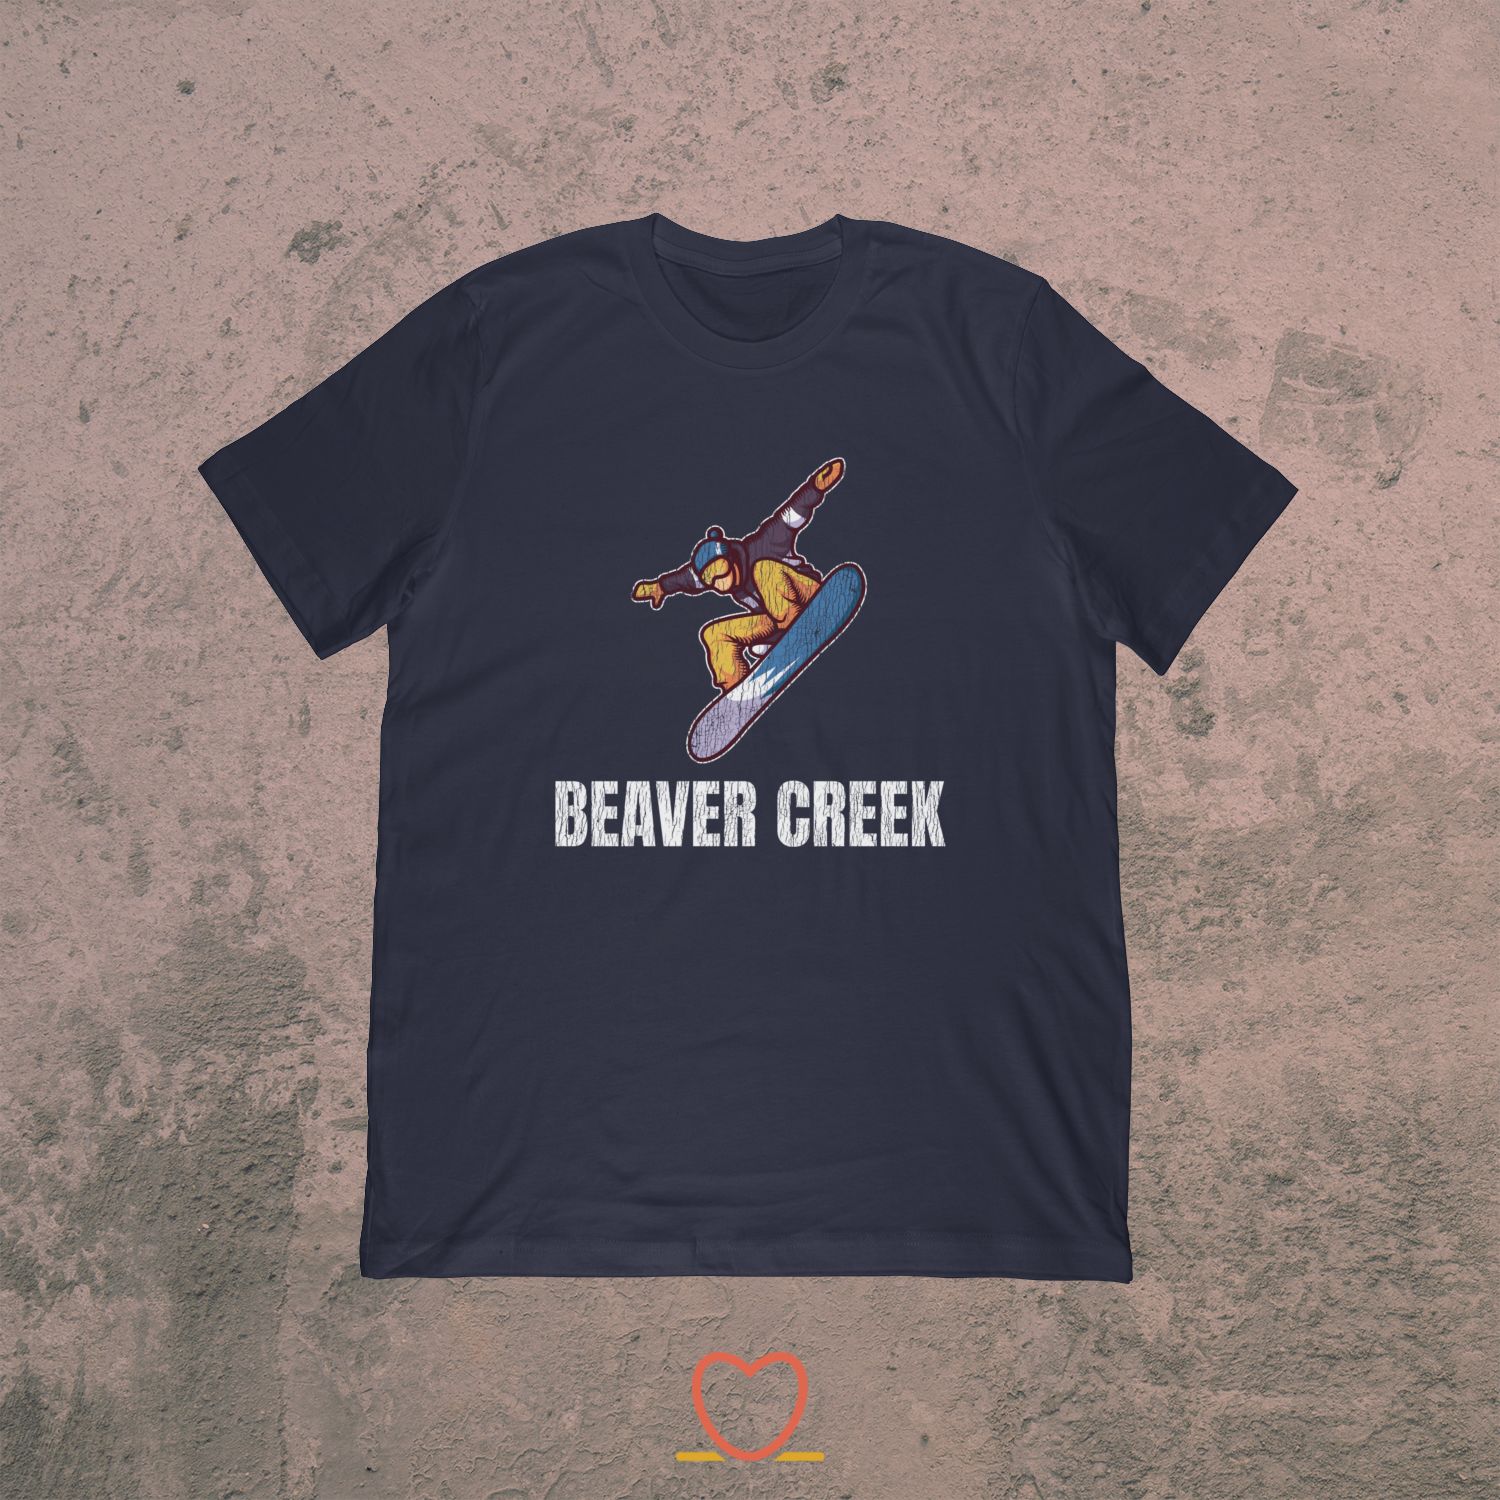 Beaver Creek – Vintage Retro Snowboard Tee